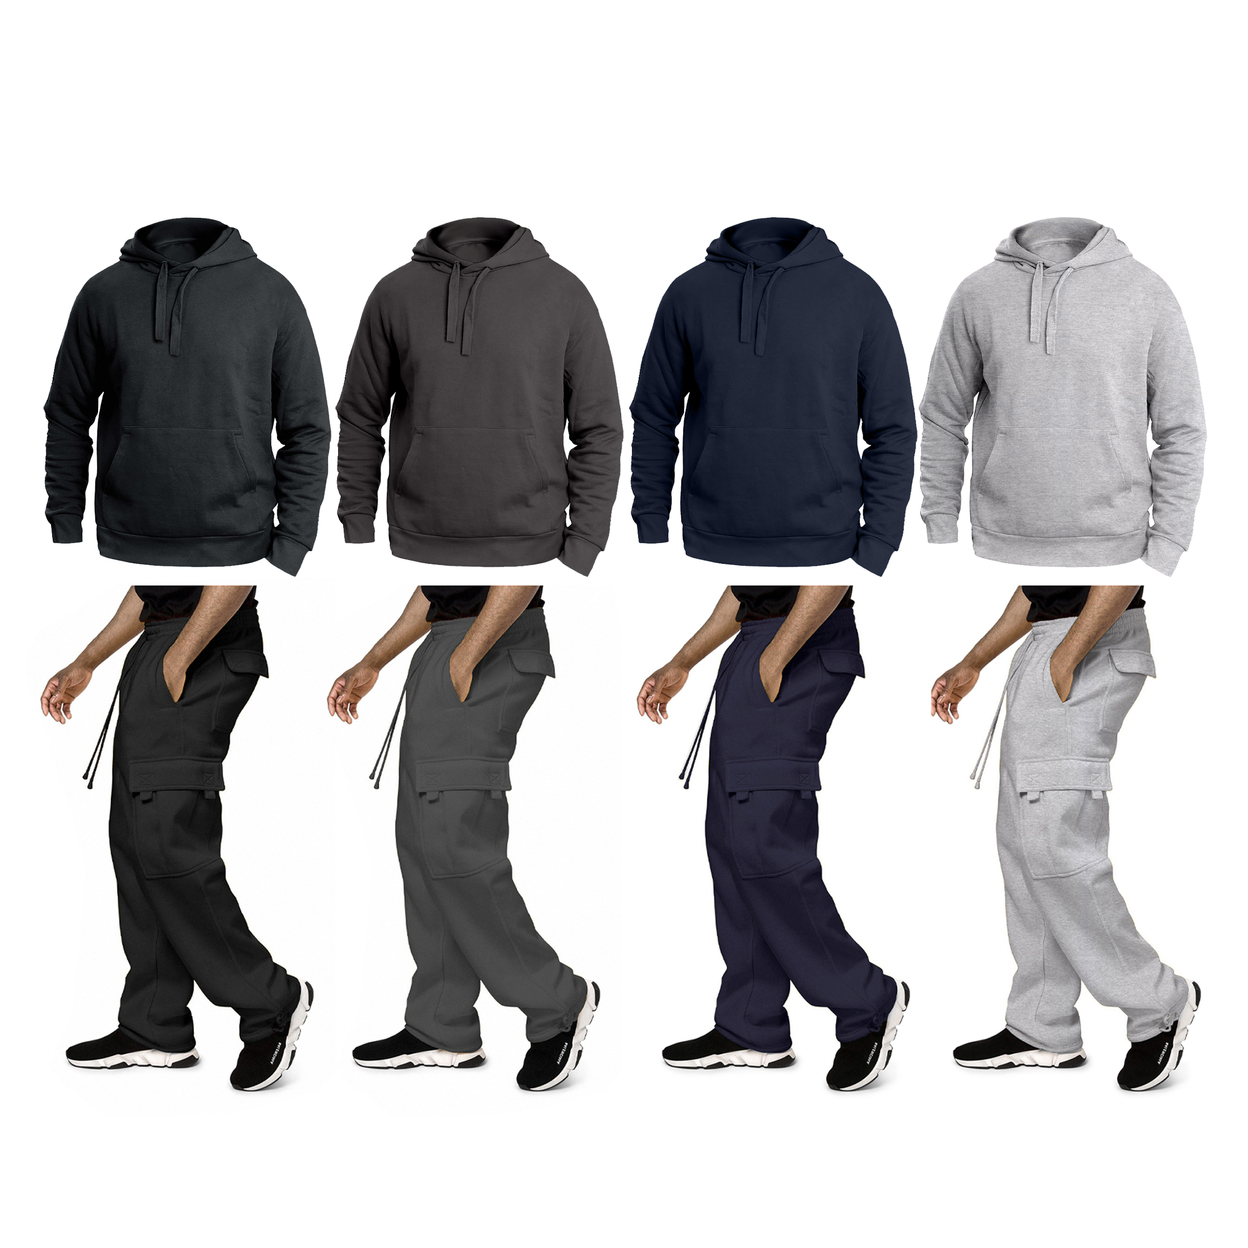 Multi-Pack: Big & Tall Men's Winter Warm Cozy Athletic Fleece Lined Multi-Pocket Cargo Sweatsuit - Navy, 2-pack, Large